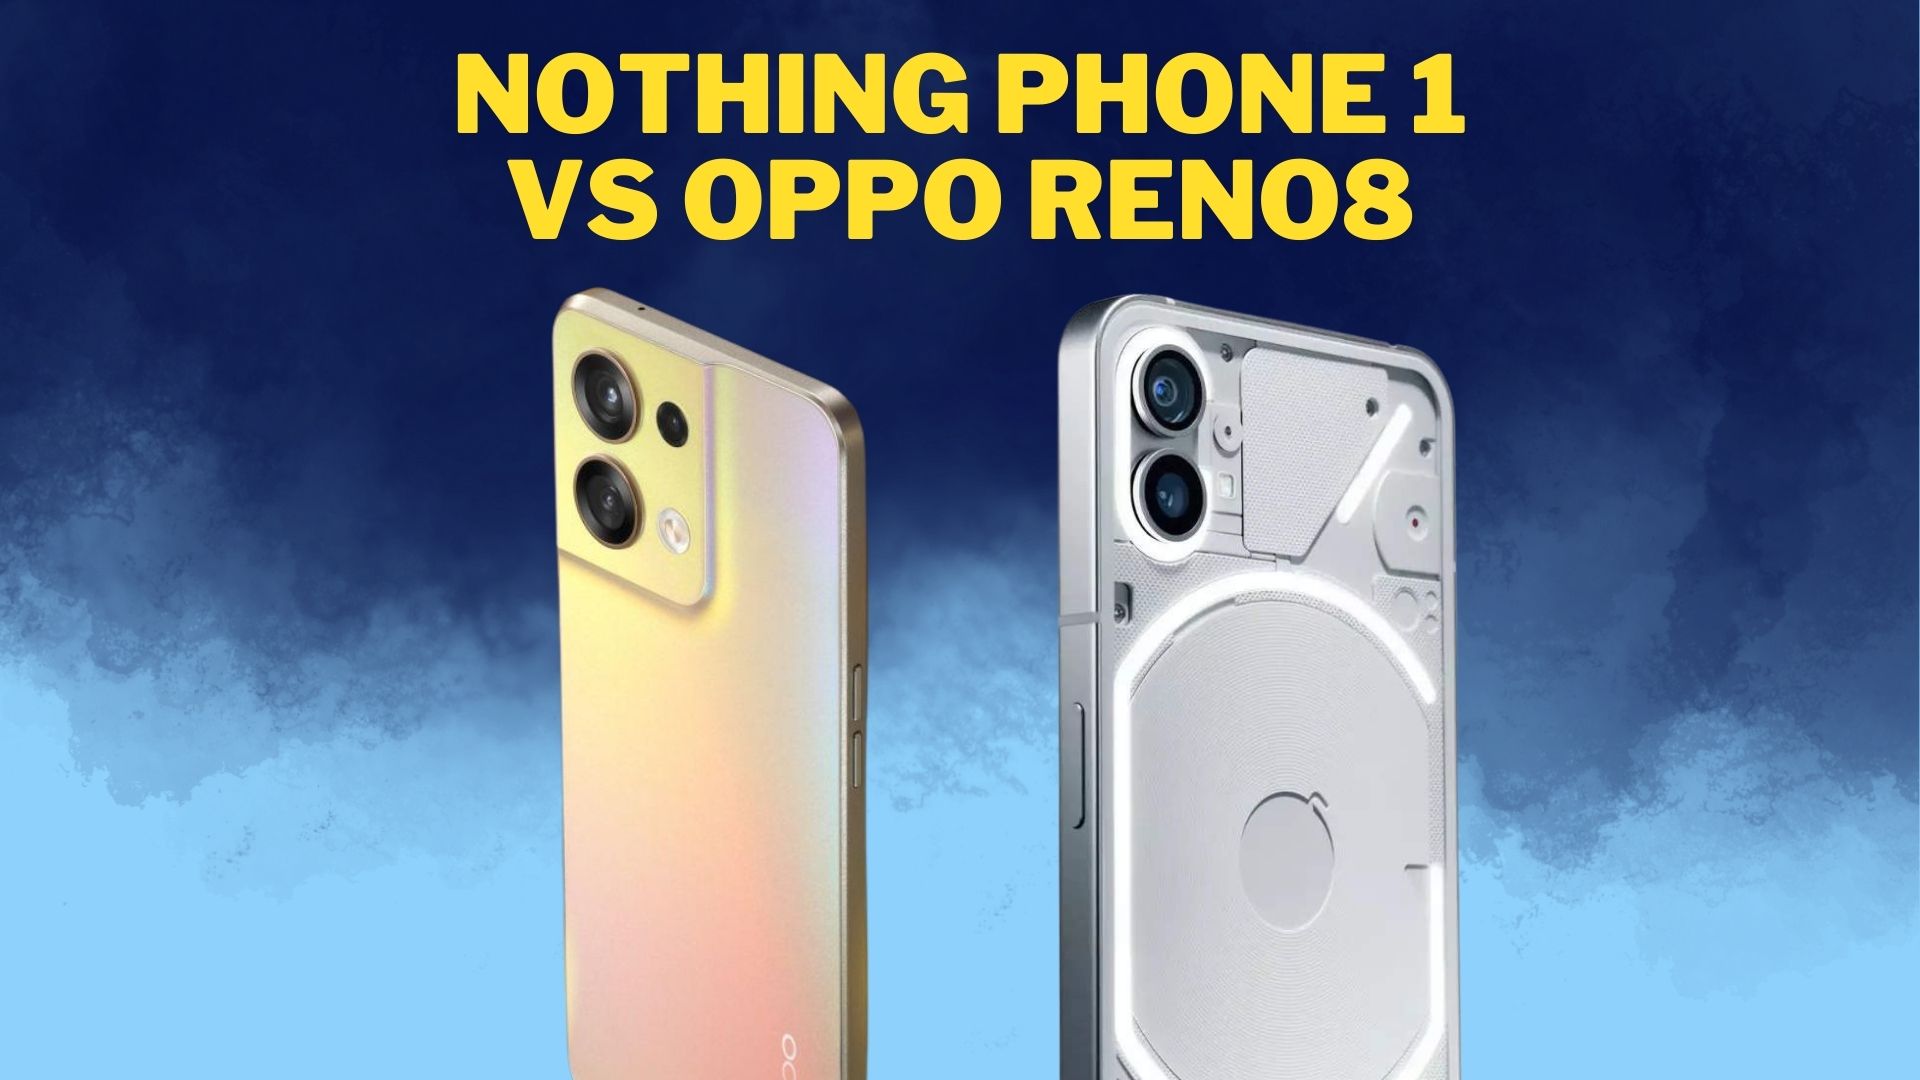 Nothing Phone 1 vs OPPO Reno8